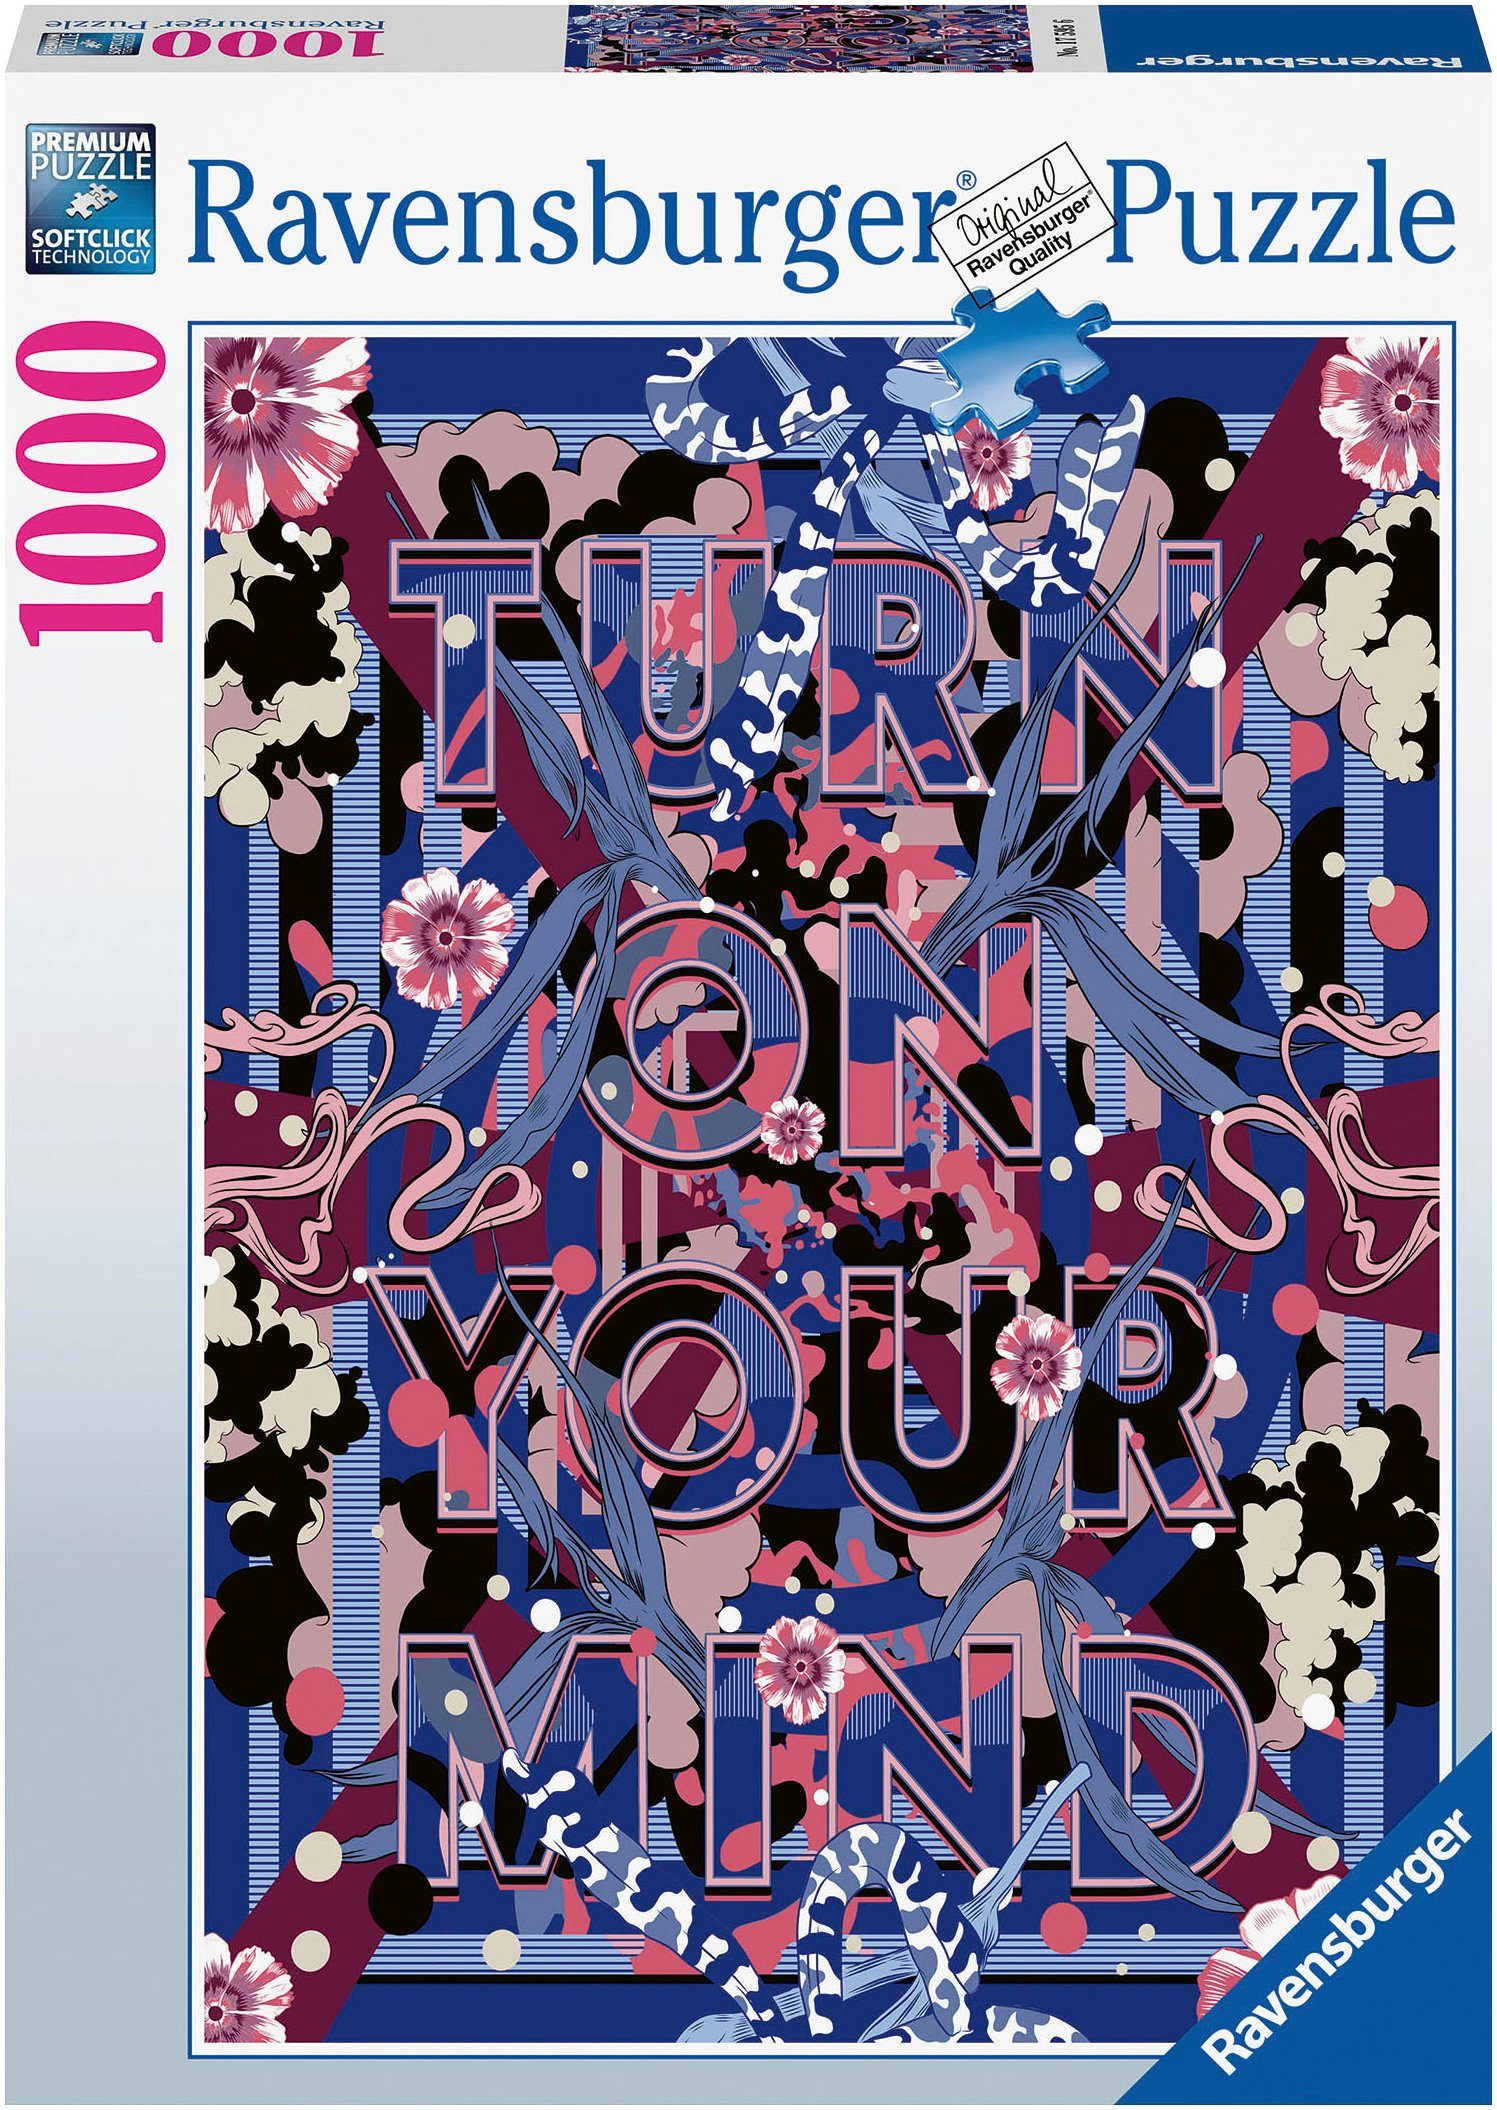 Ravensburger Puzzle Turn on your mind, 1000 Puzzleteile, Made in Germany, FSC® - schützt Wald - weltweit